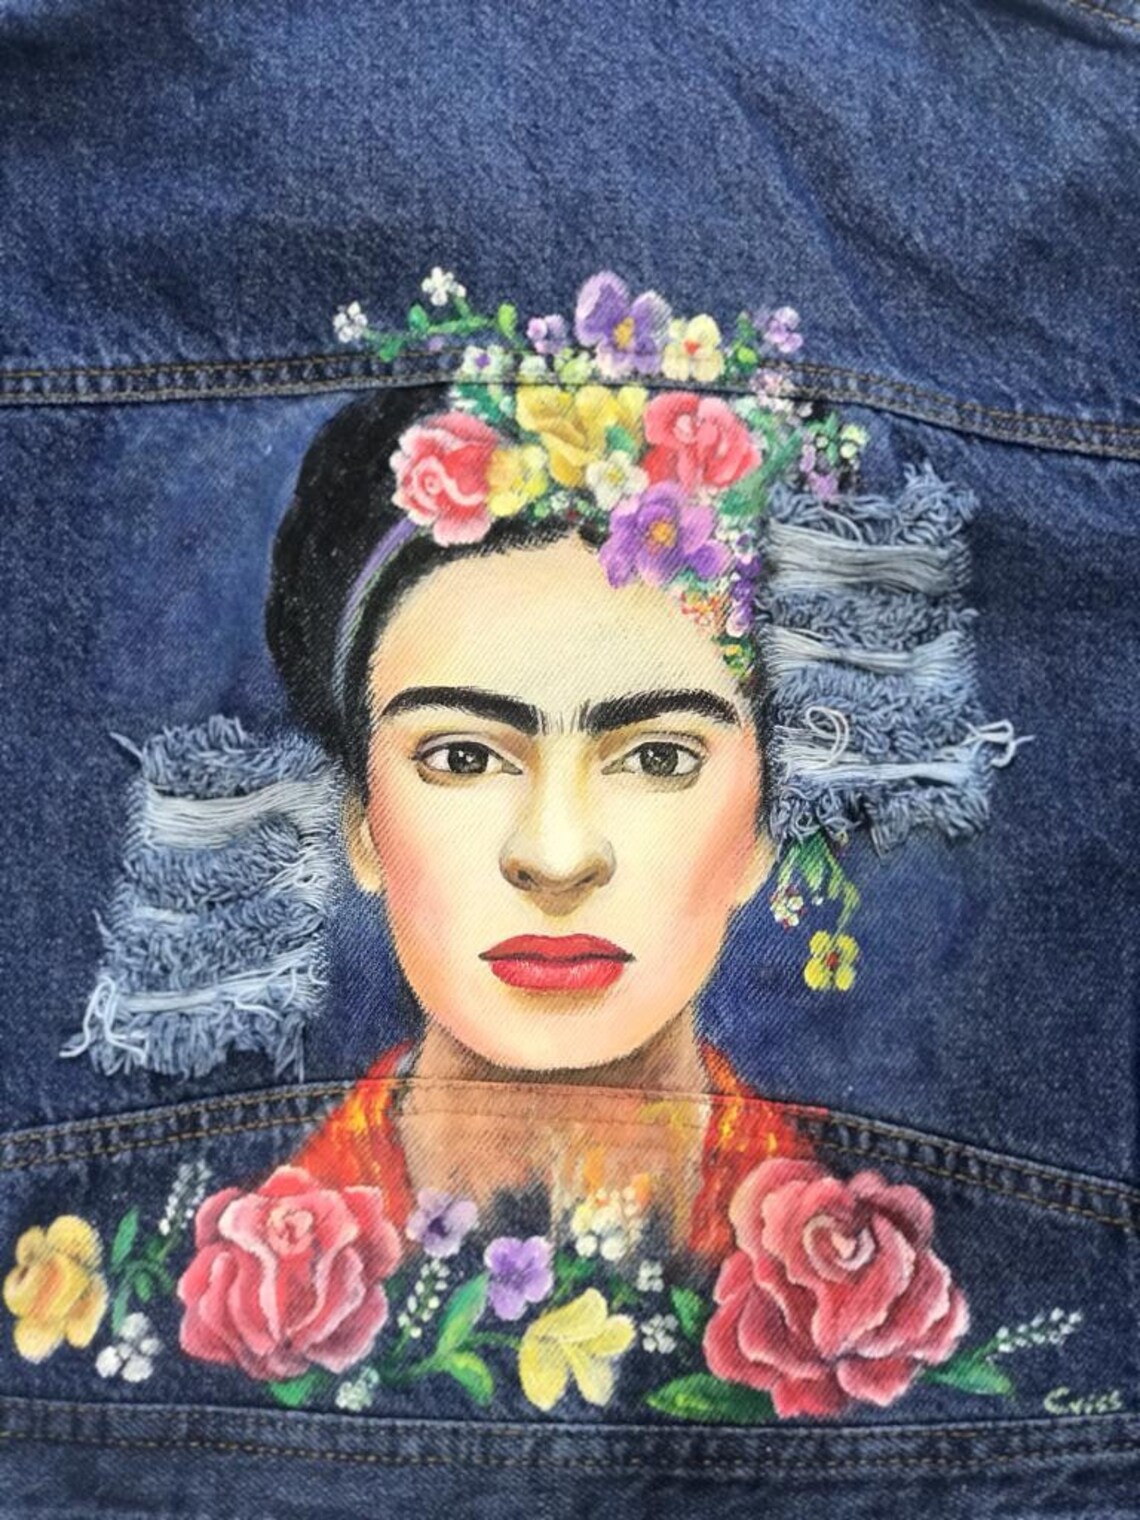 Frida Kahlo Hand Painted Ripped Denim Jacket Small - Etsy